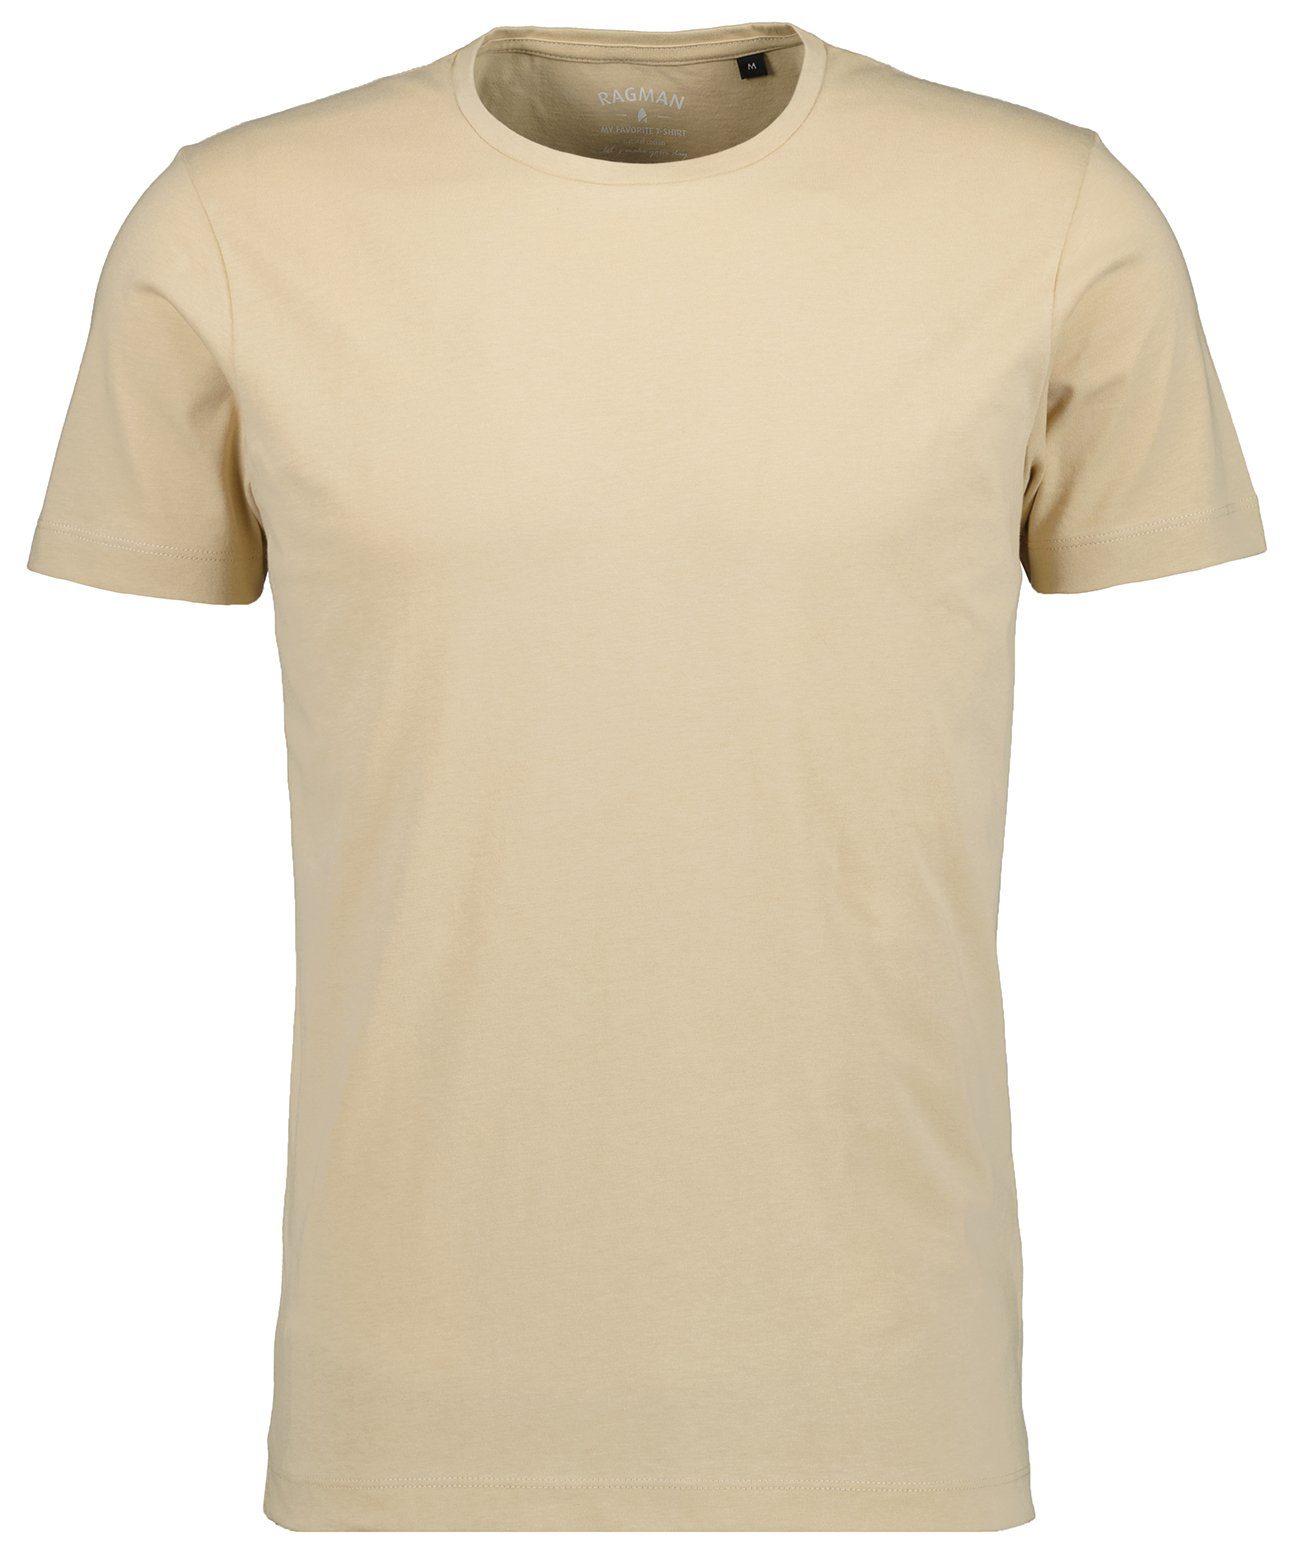 RAGMAN T-Shirt Beige-Melange